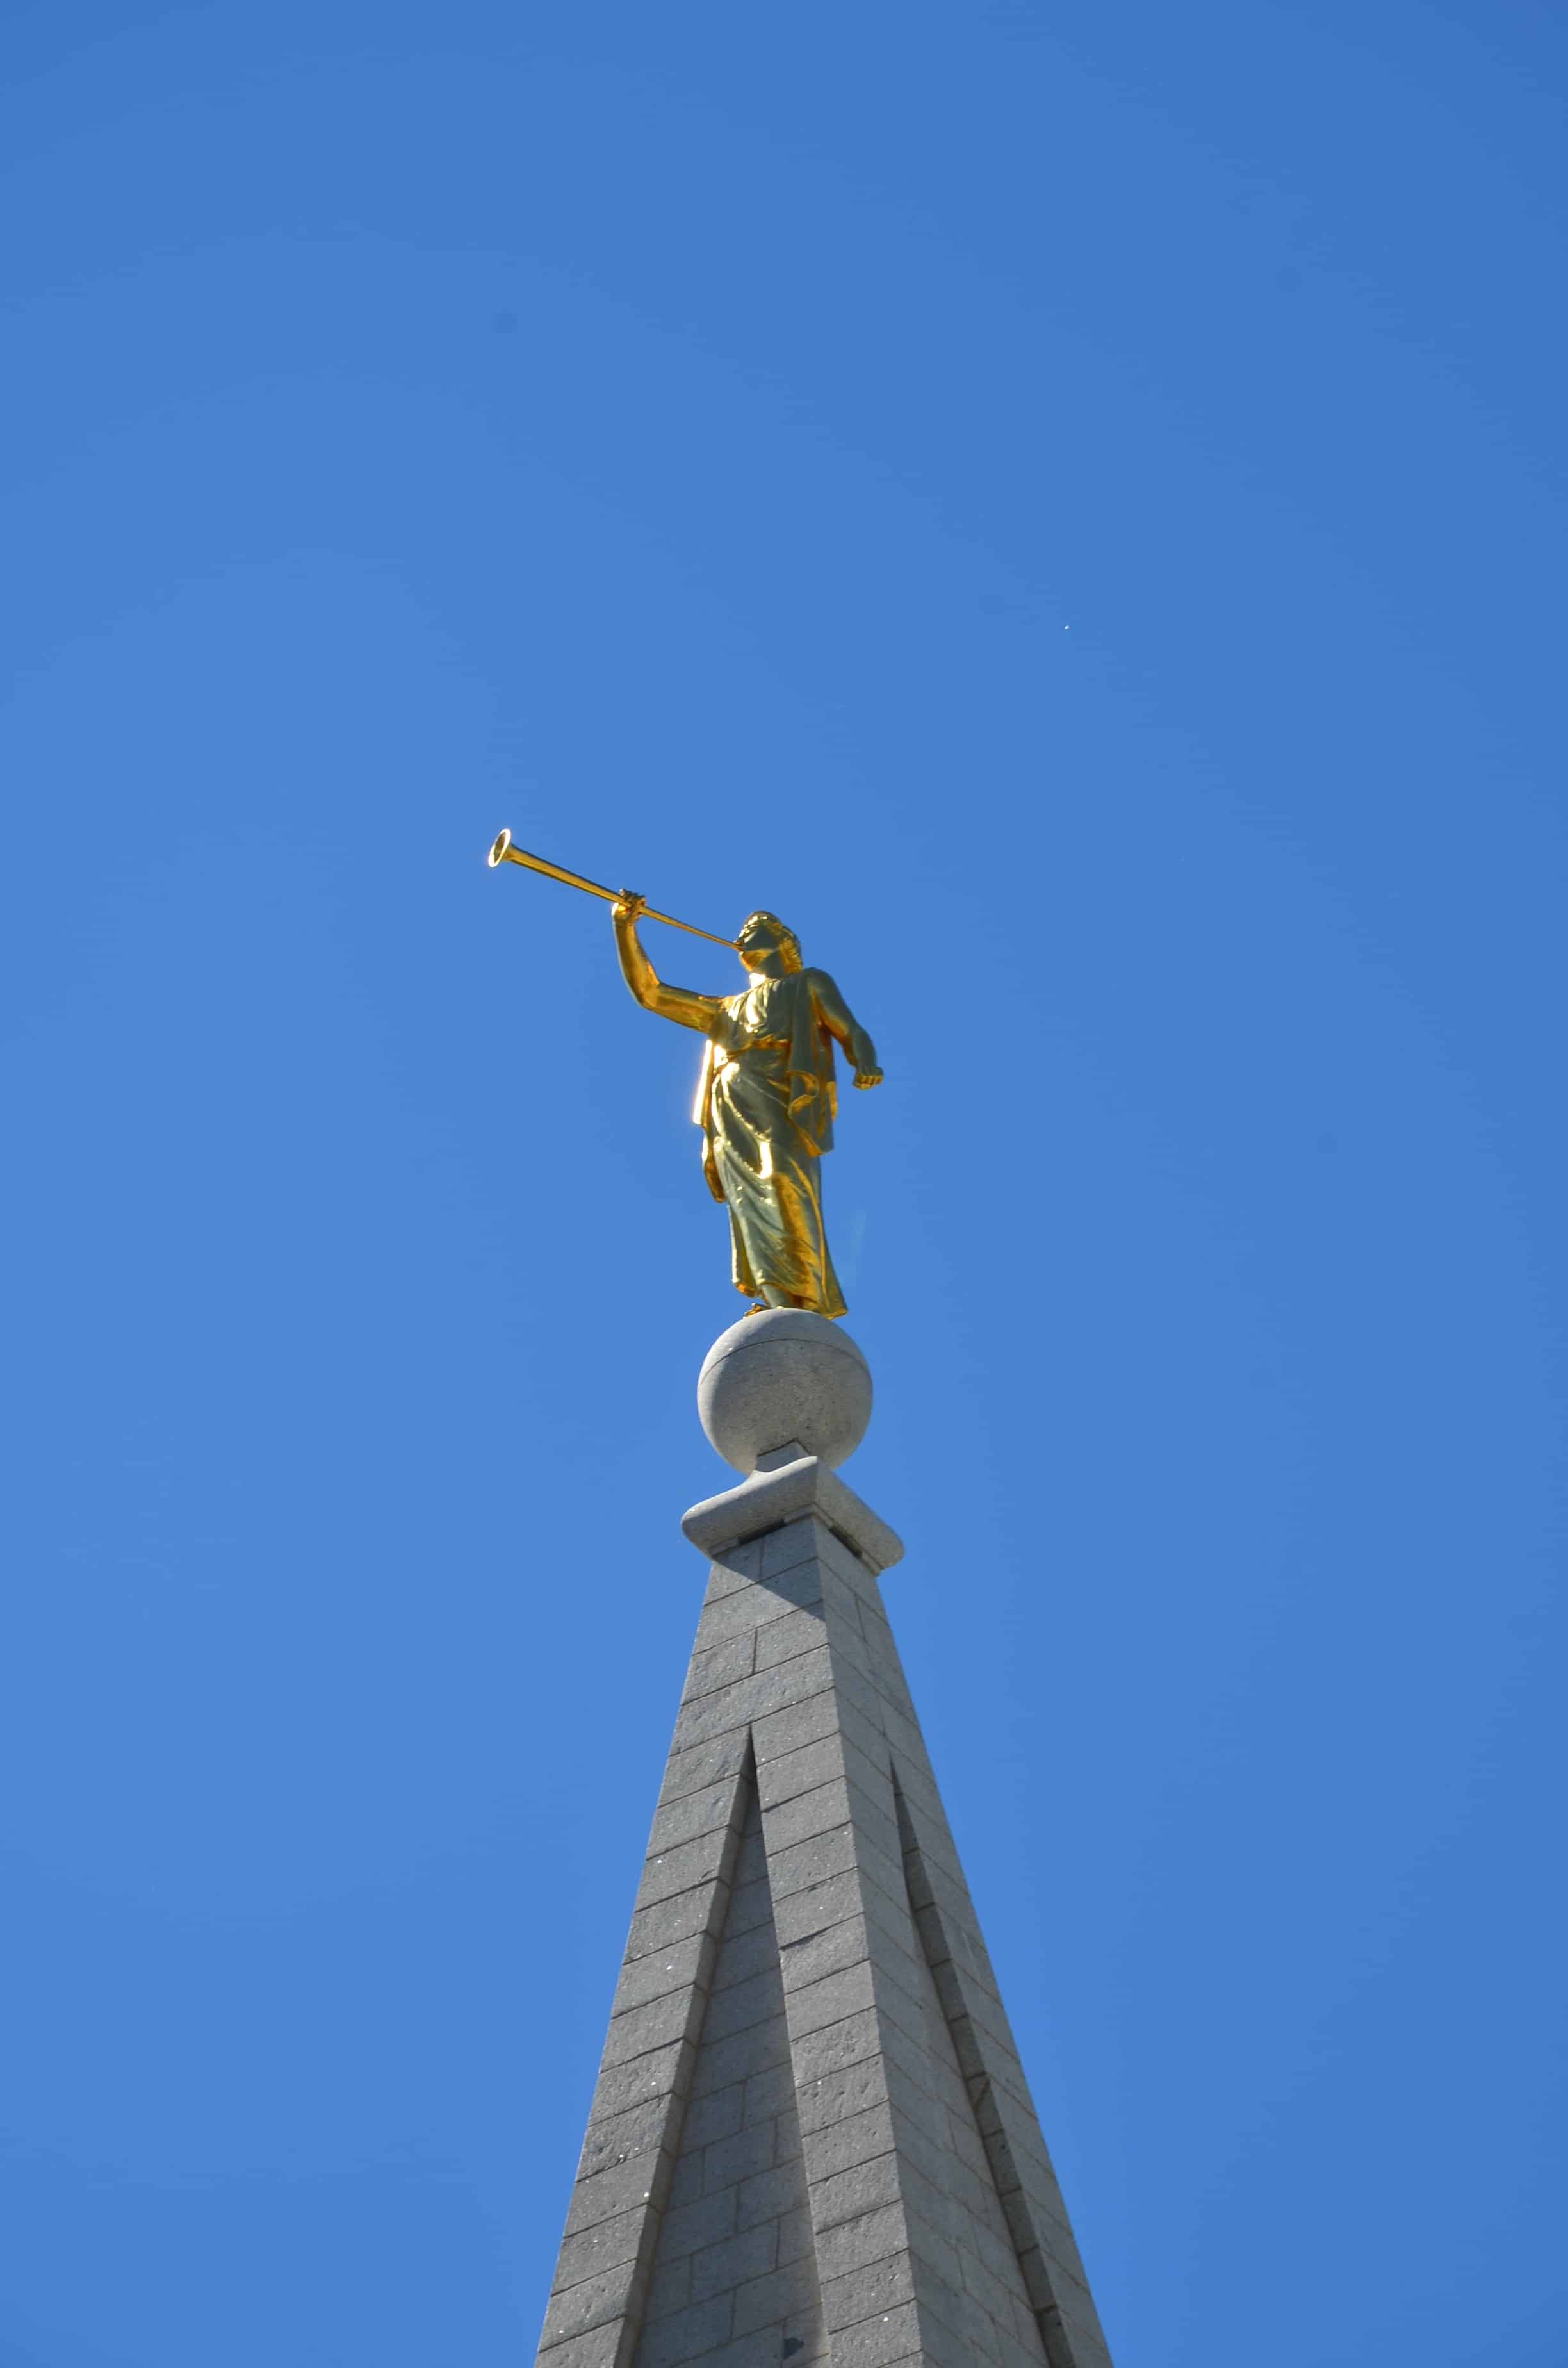 Angel Moroni atop Salt Lake Temple at Temple Square in Salt Lake City, Utah